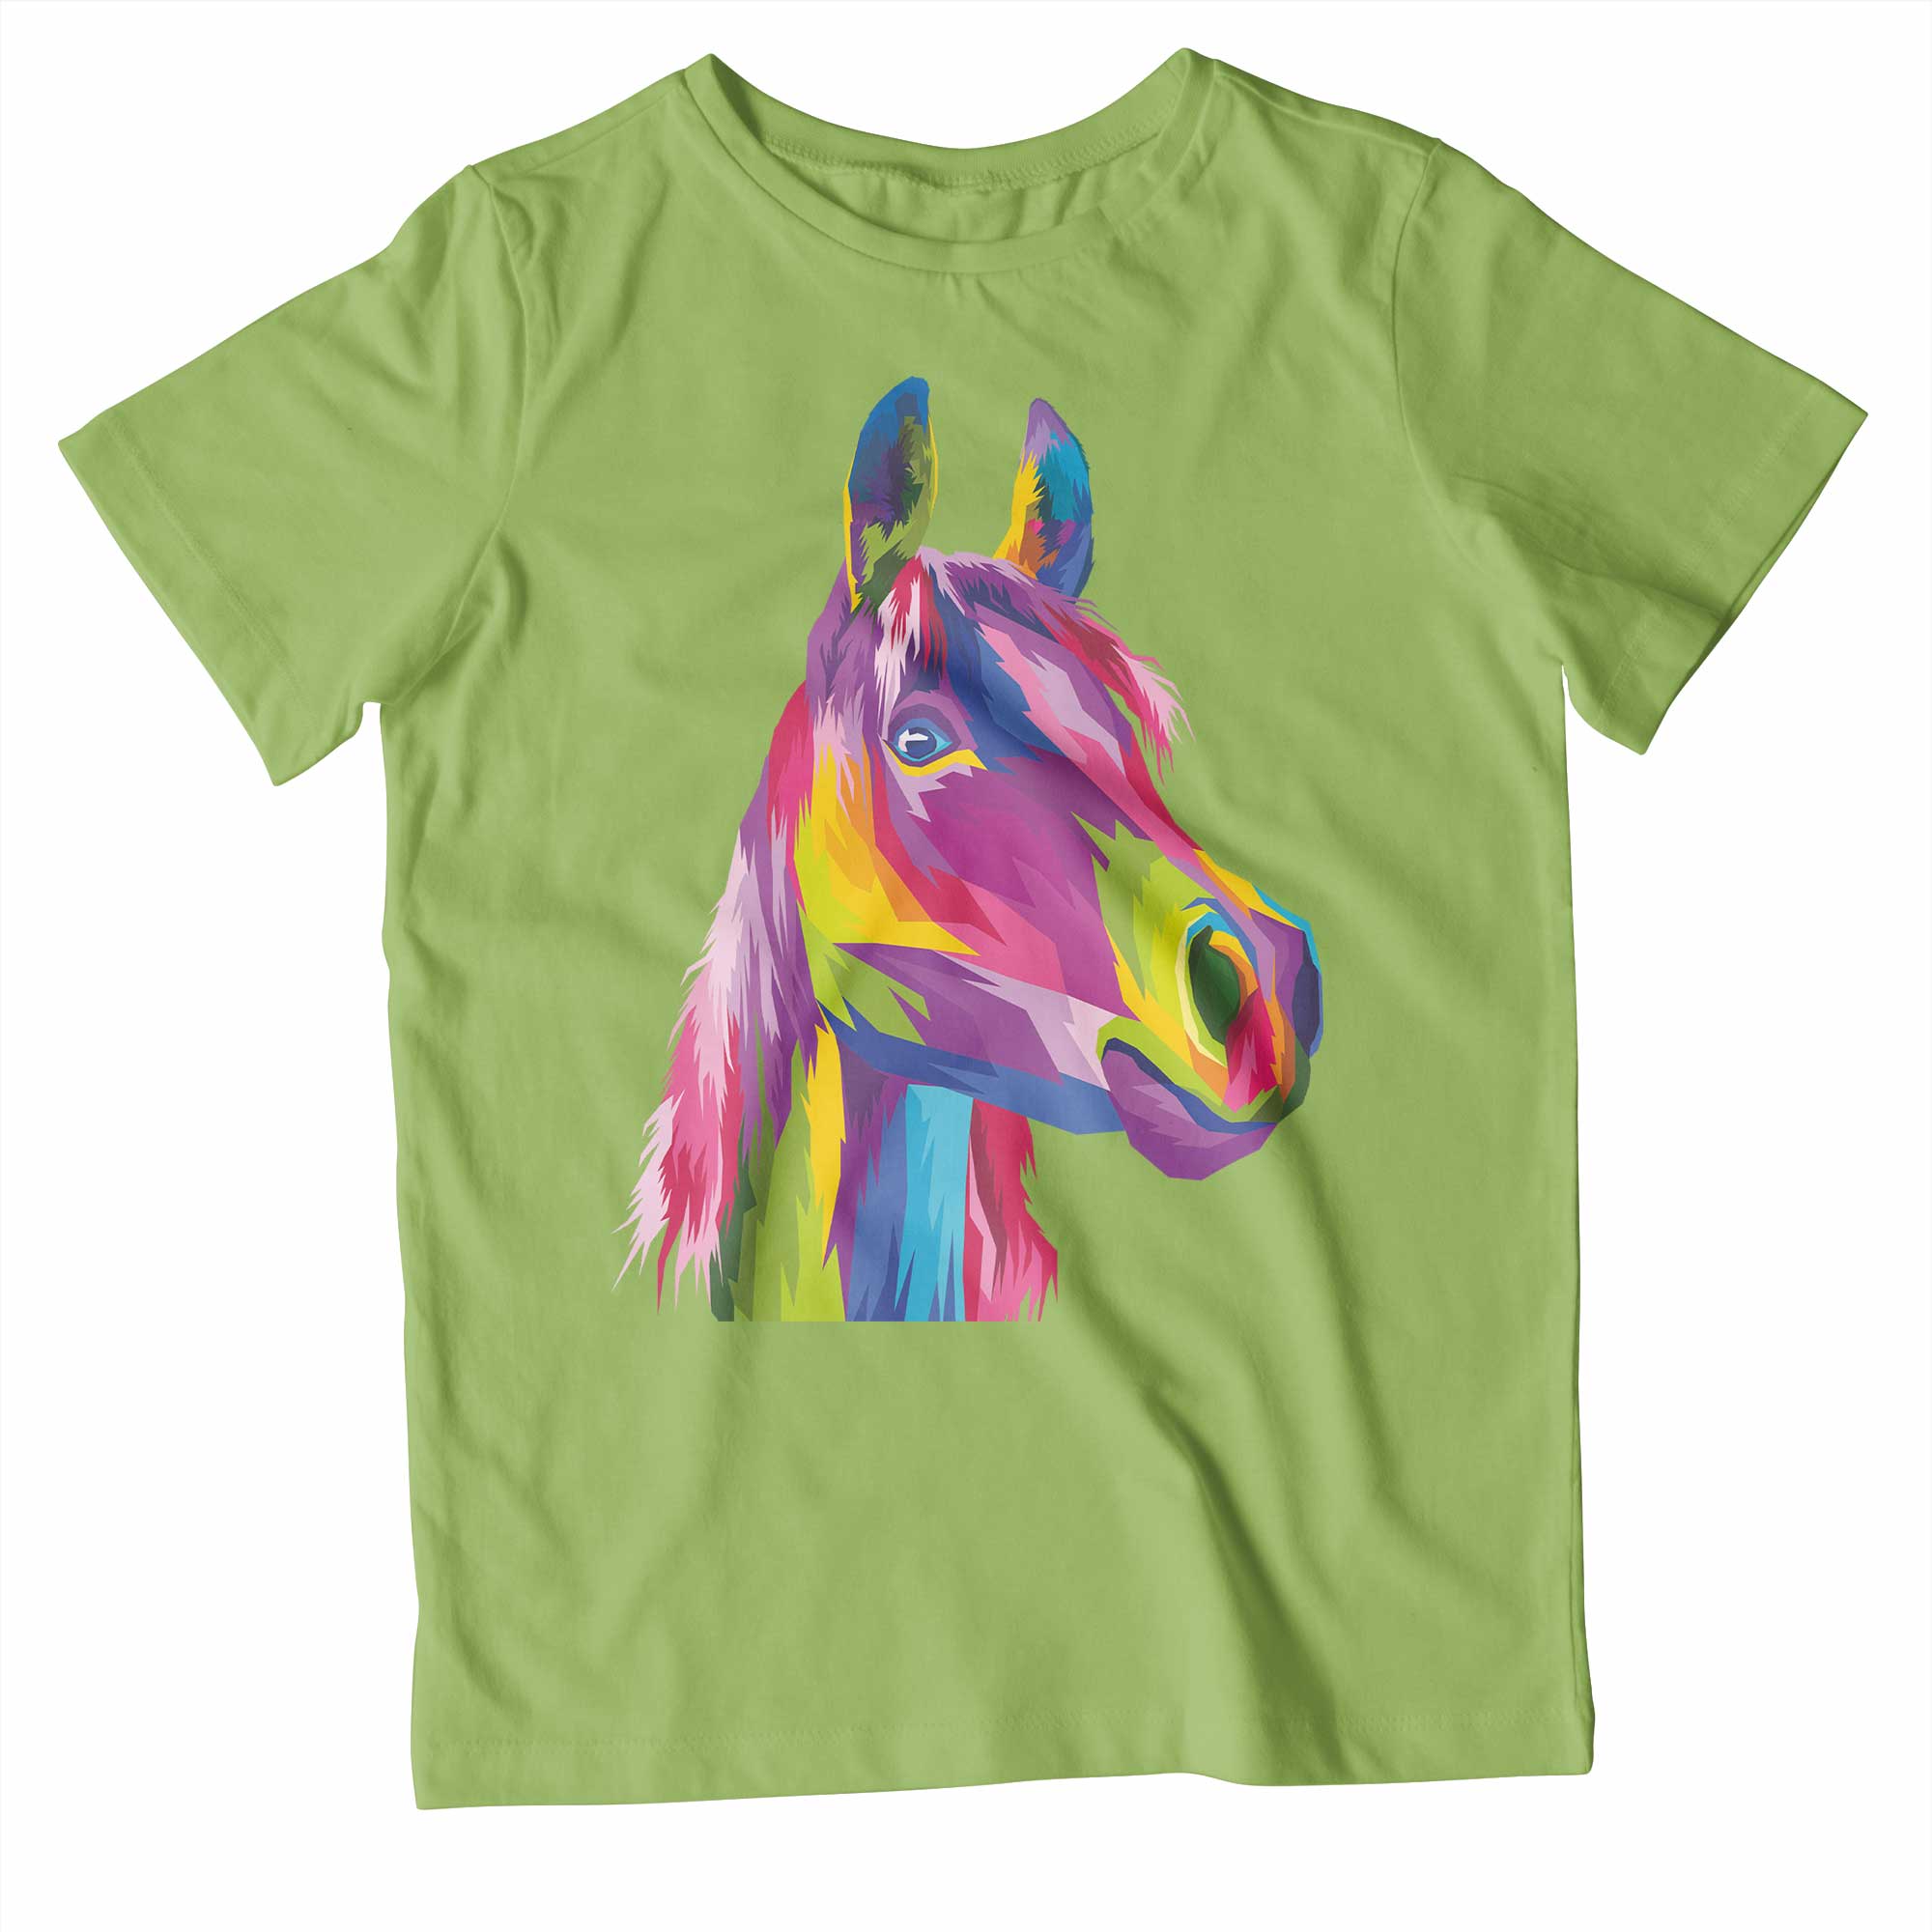 Kids Colourful Horse T-Shirt